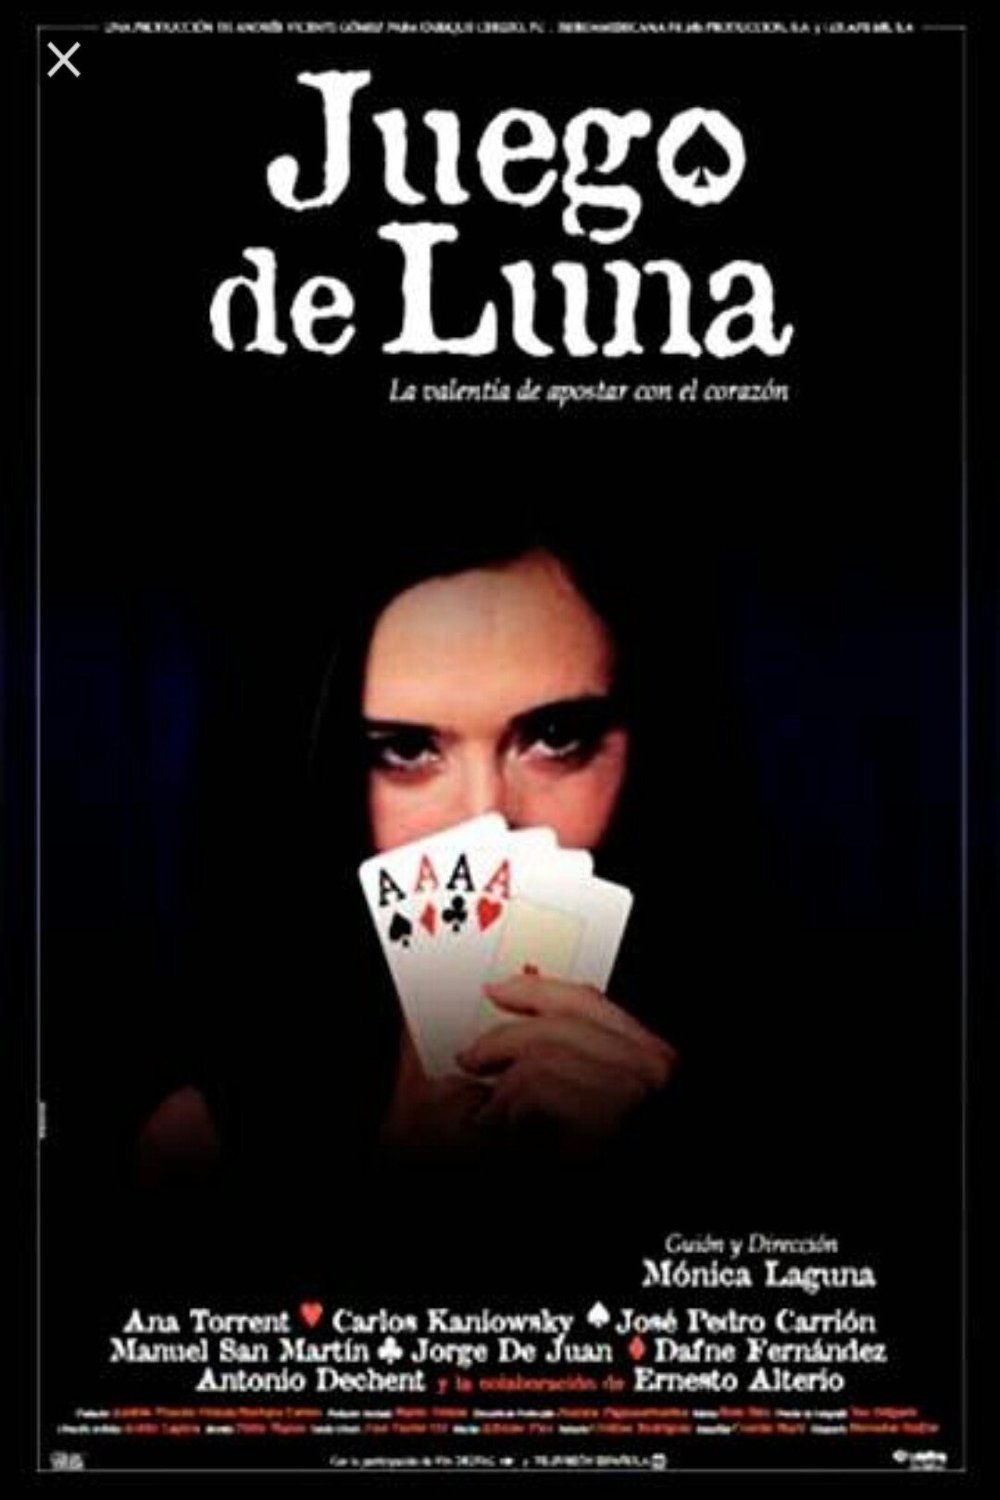 Spanish poster of the movie Juego de Luna